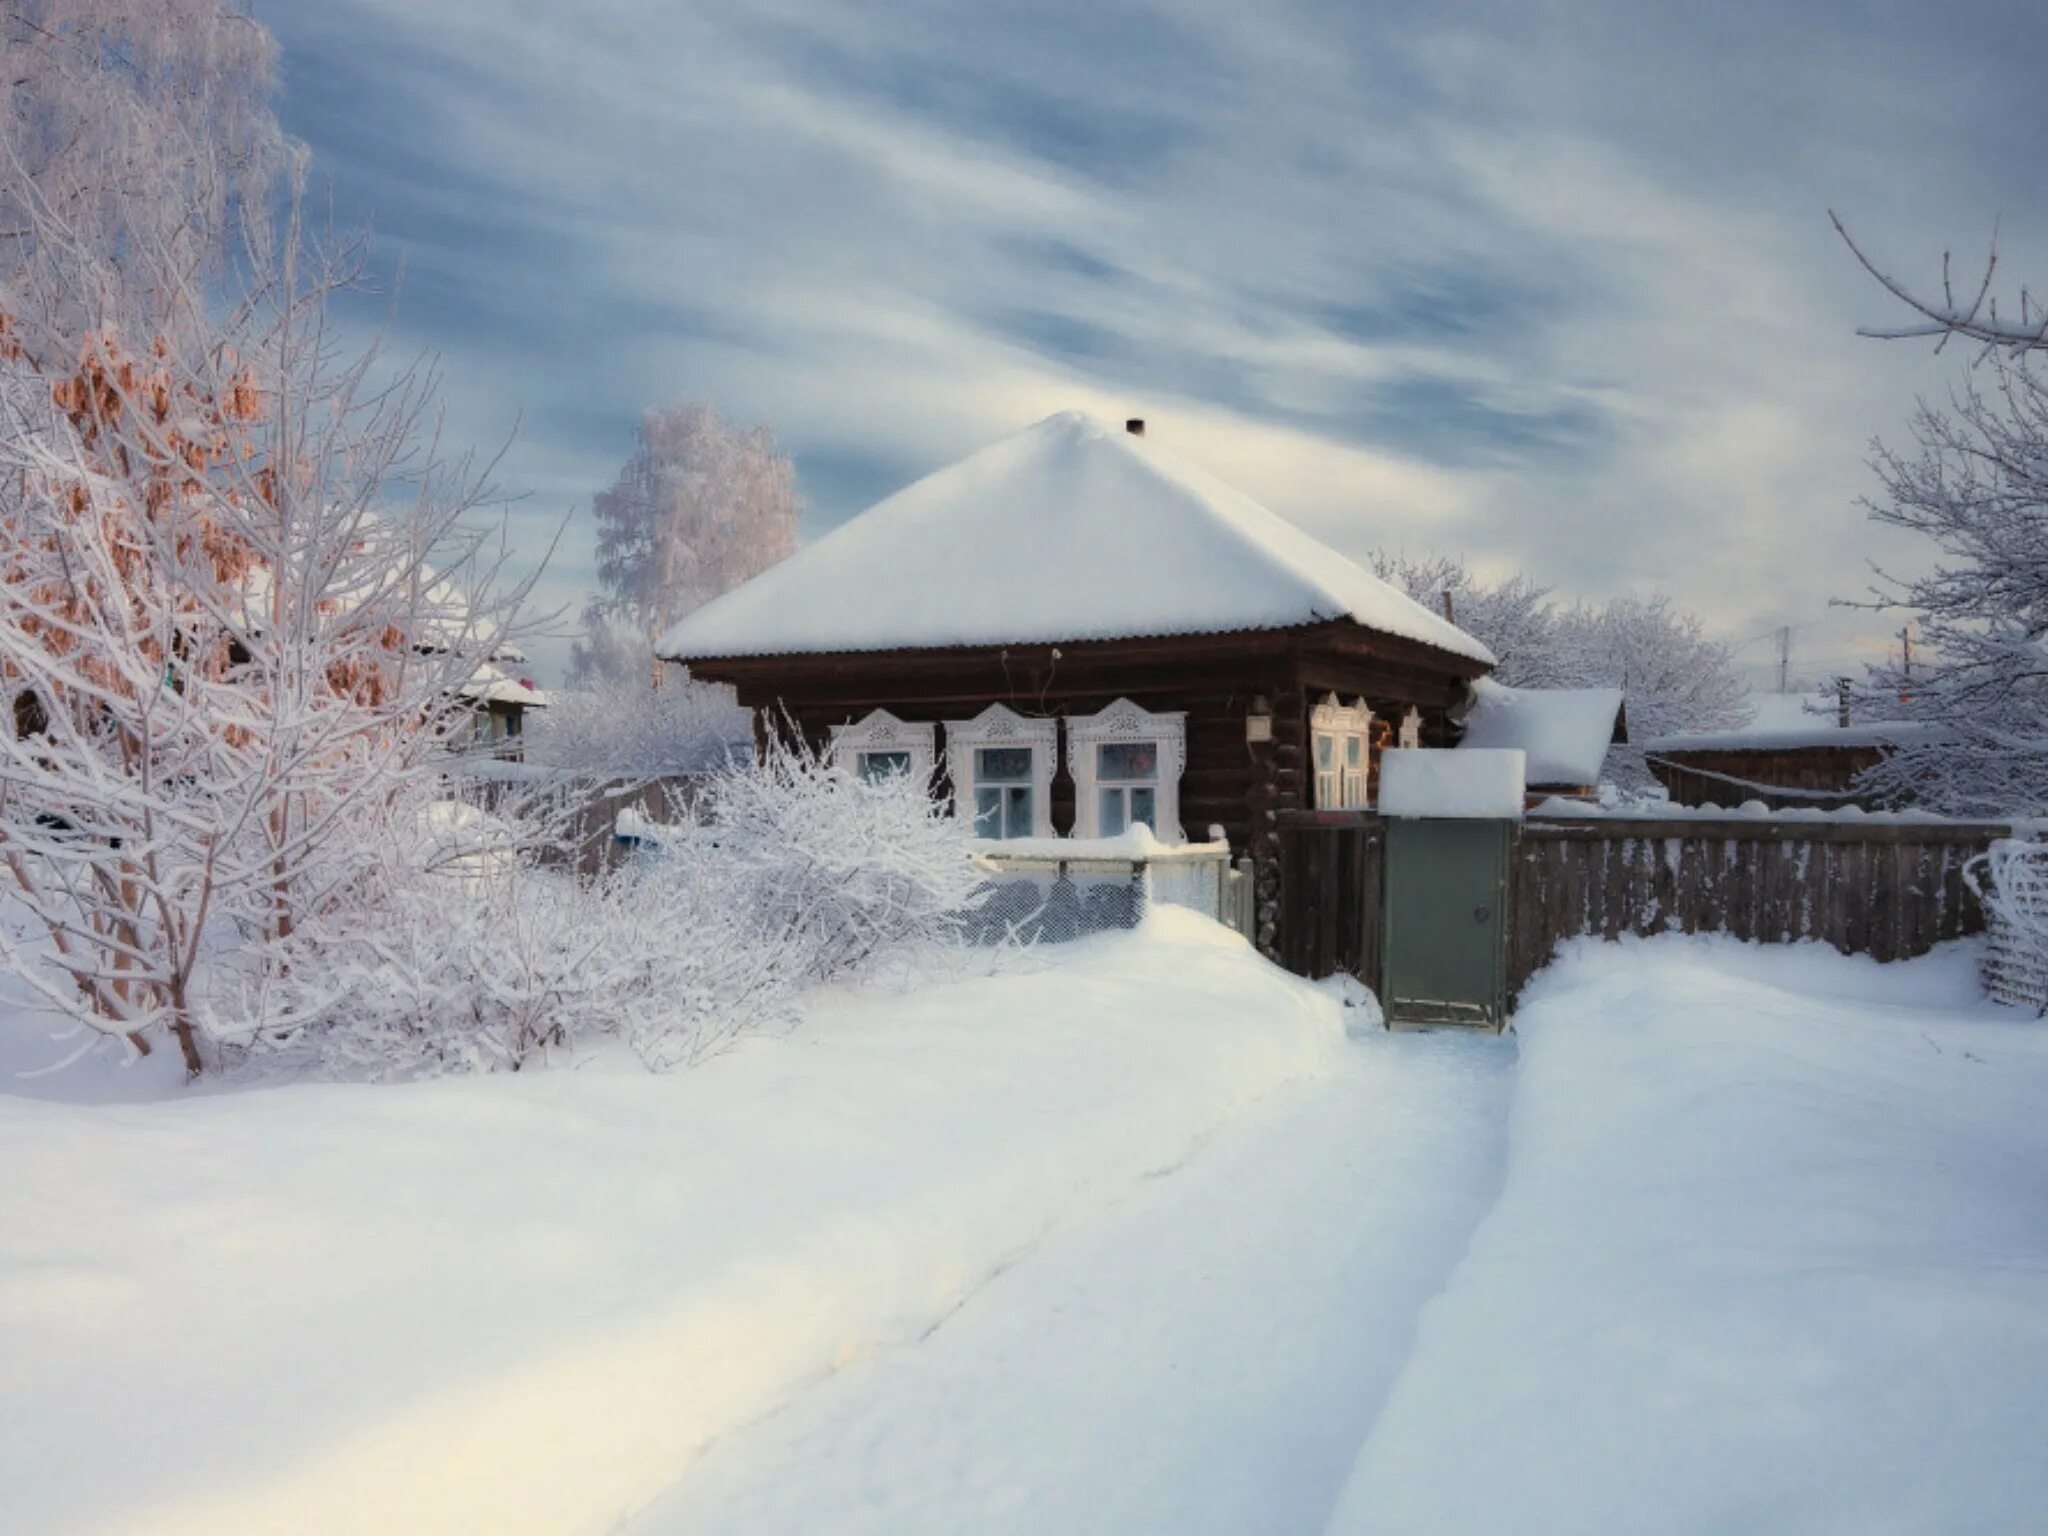 Зима в деревне. Зимняя деревня. Заснеженный двор в деревне. Деревенский домик в снегу.